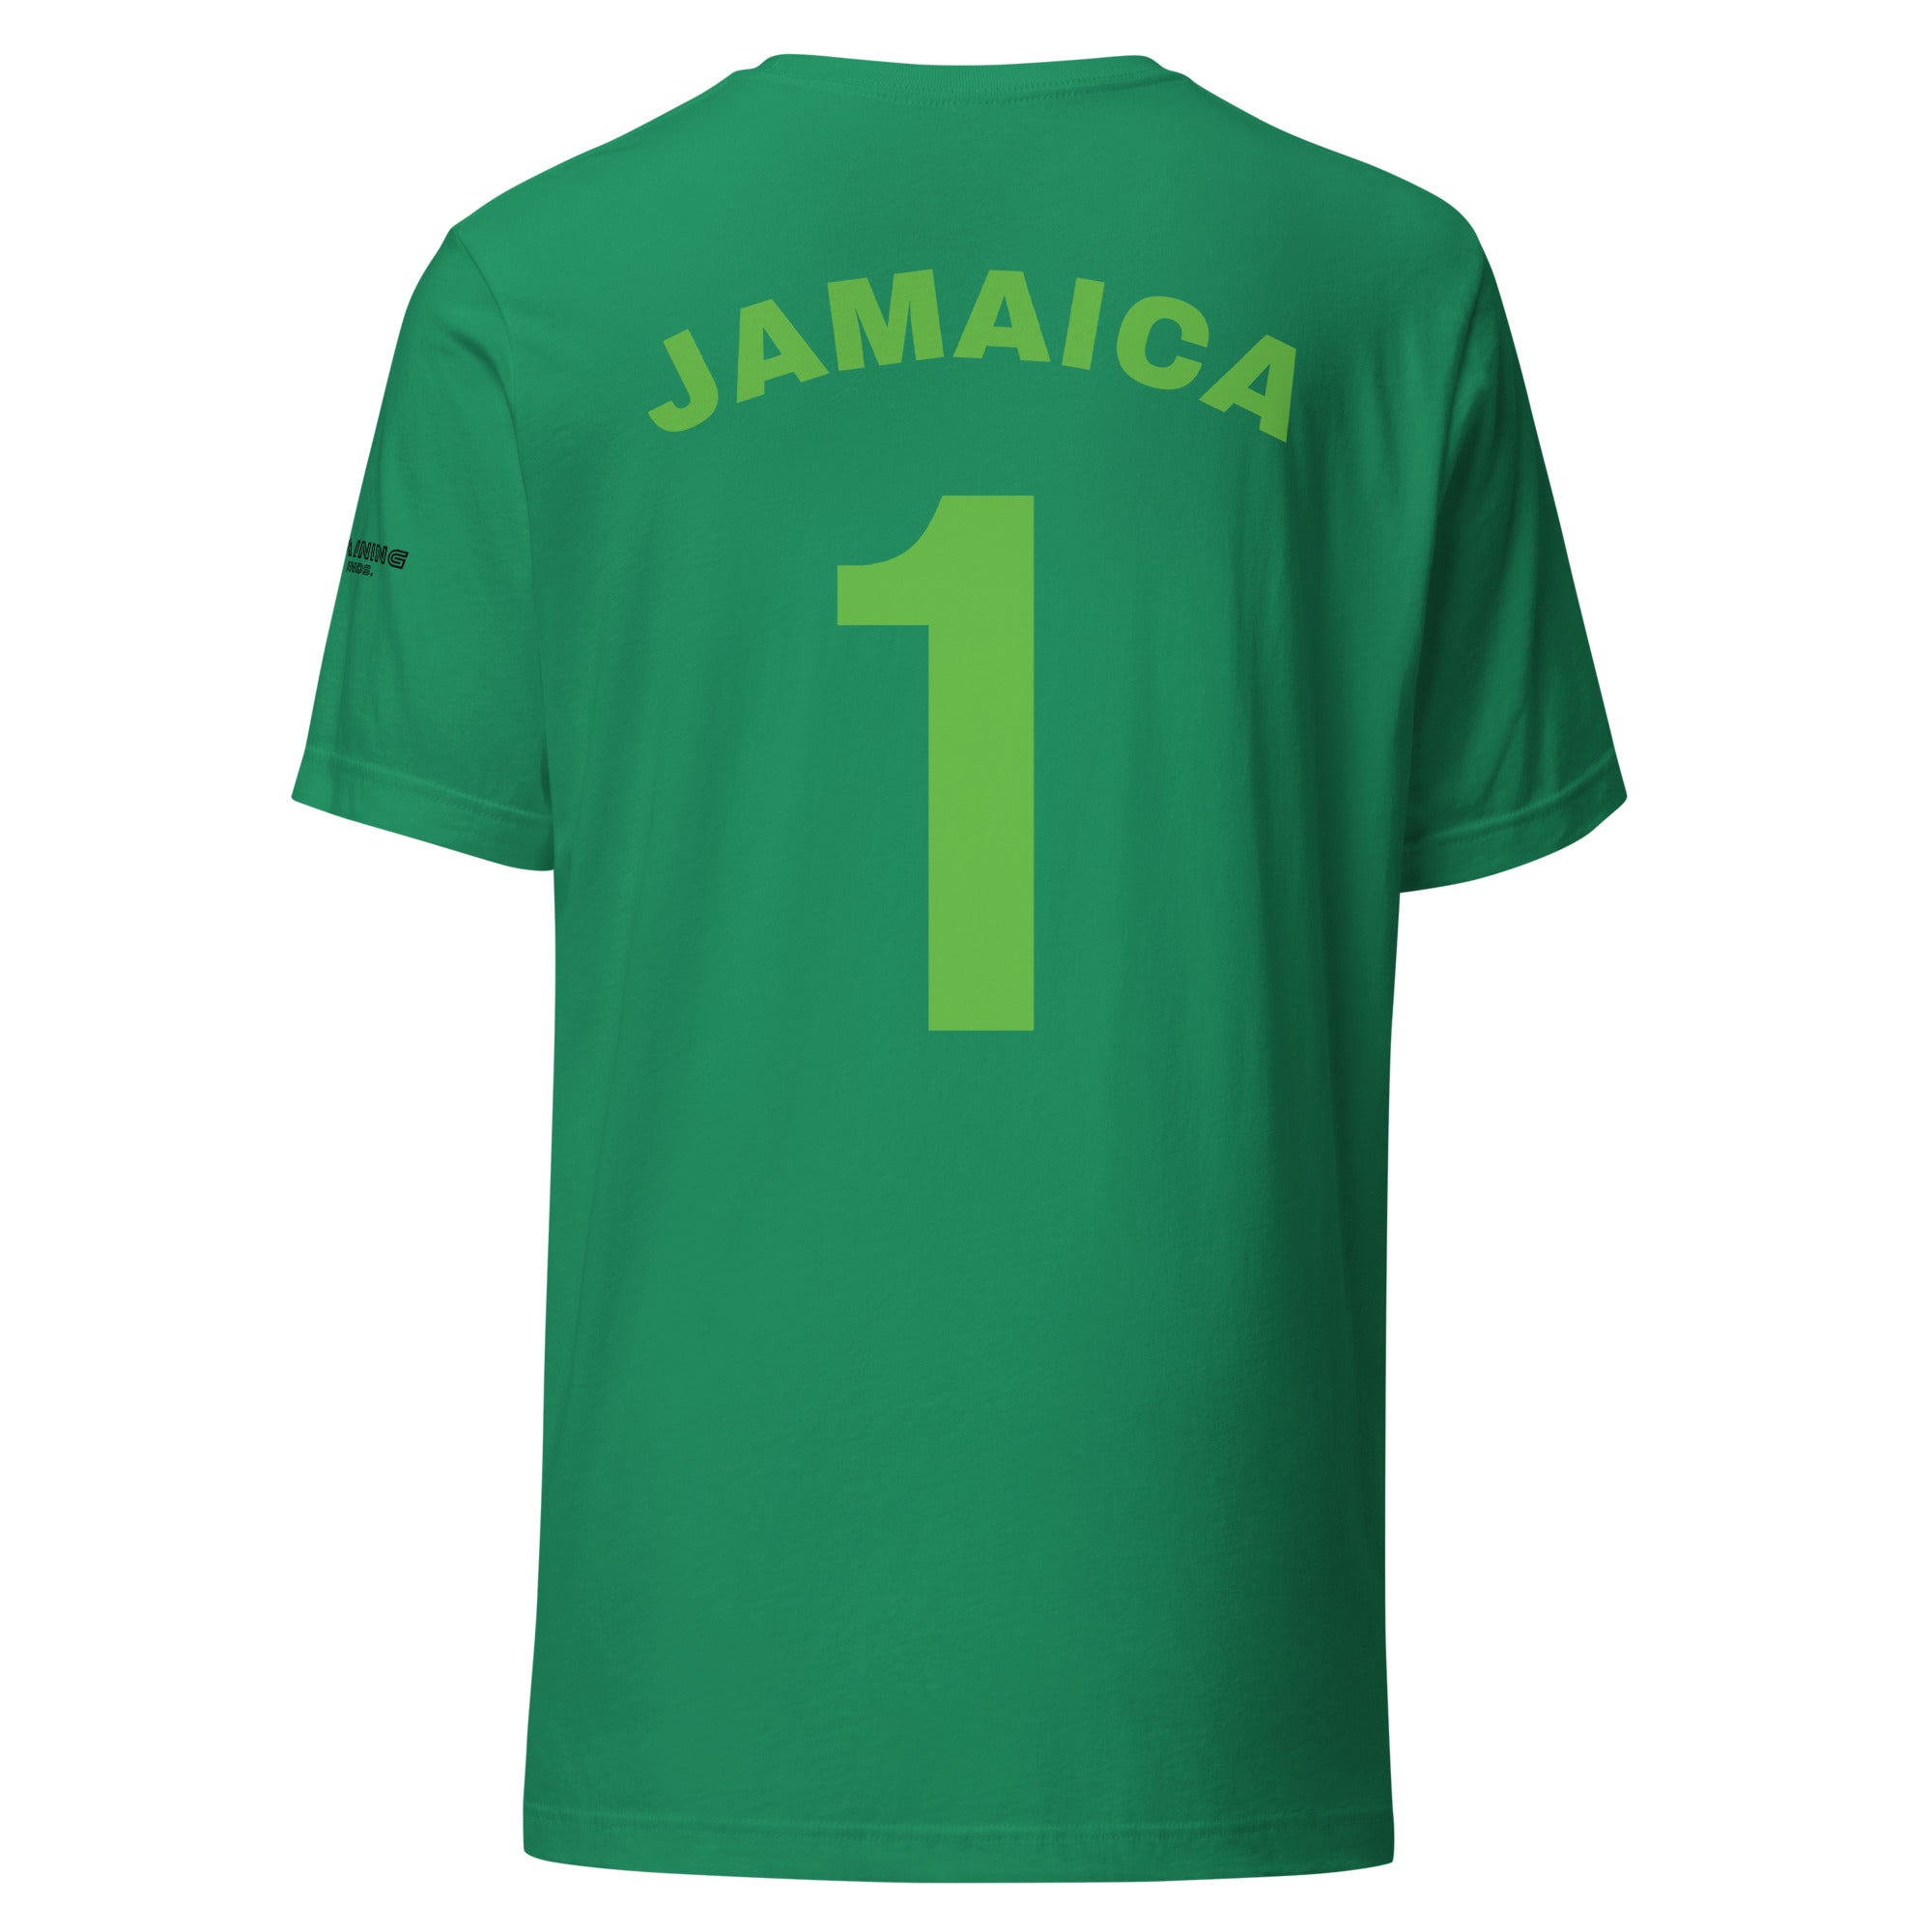 Jamaican - Unisex t-shirt